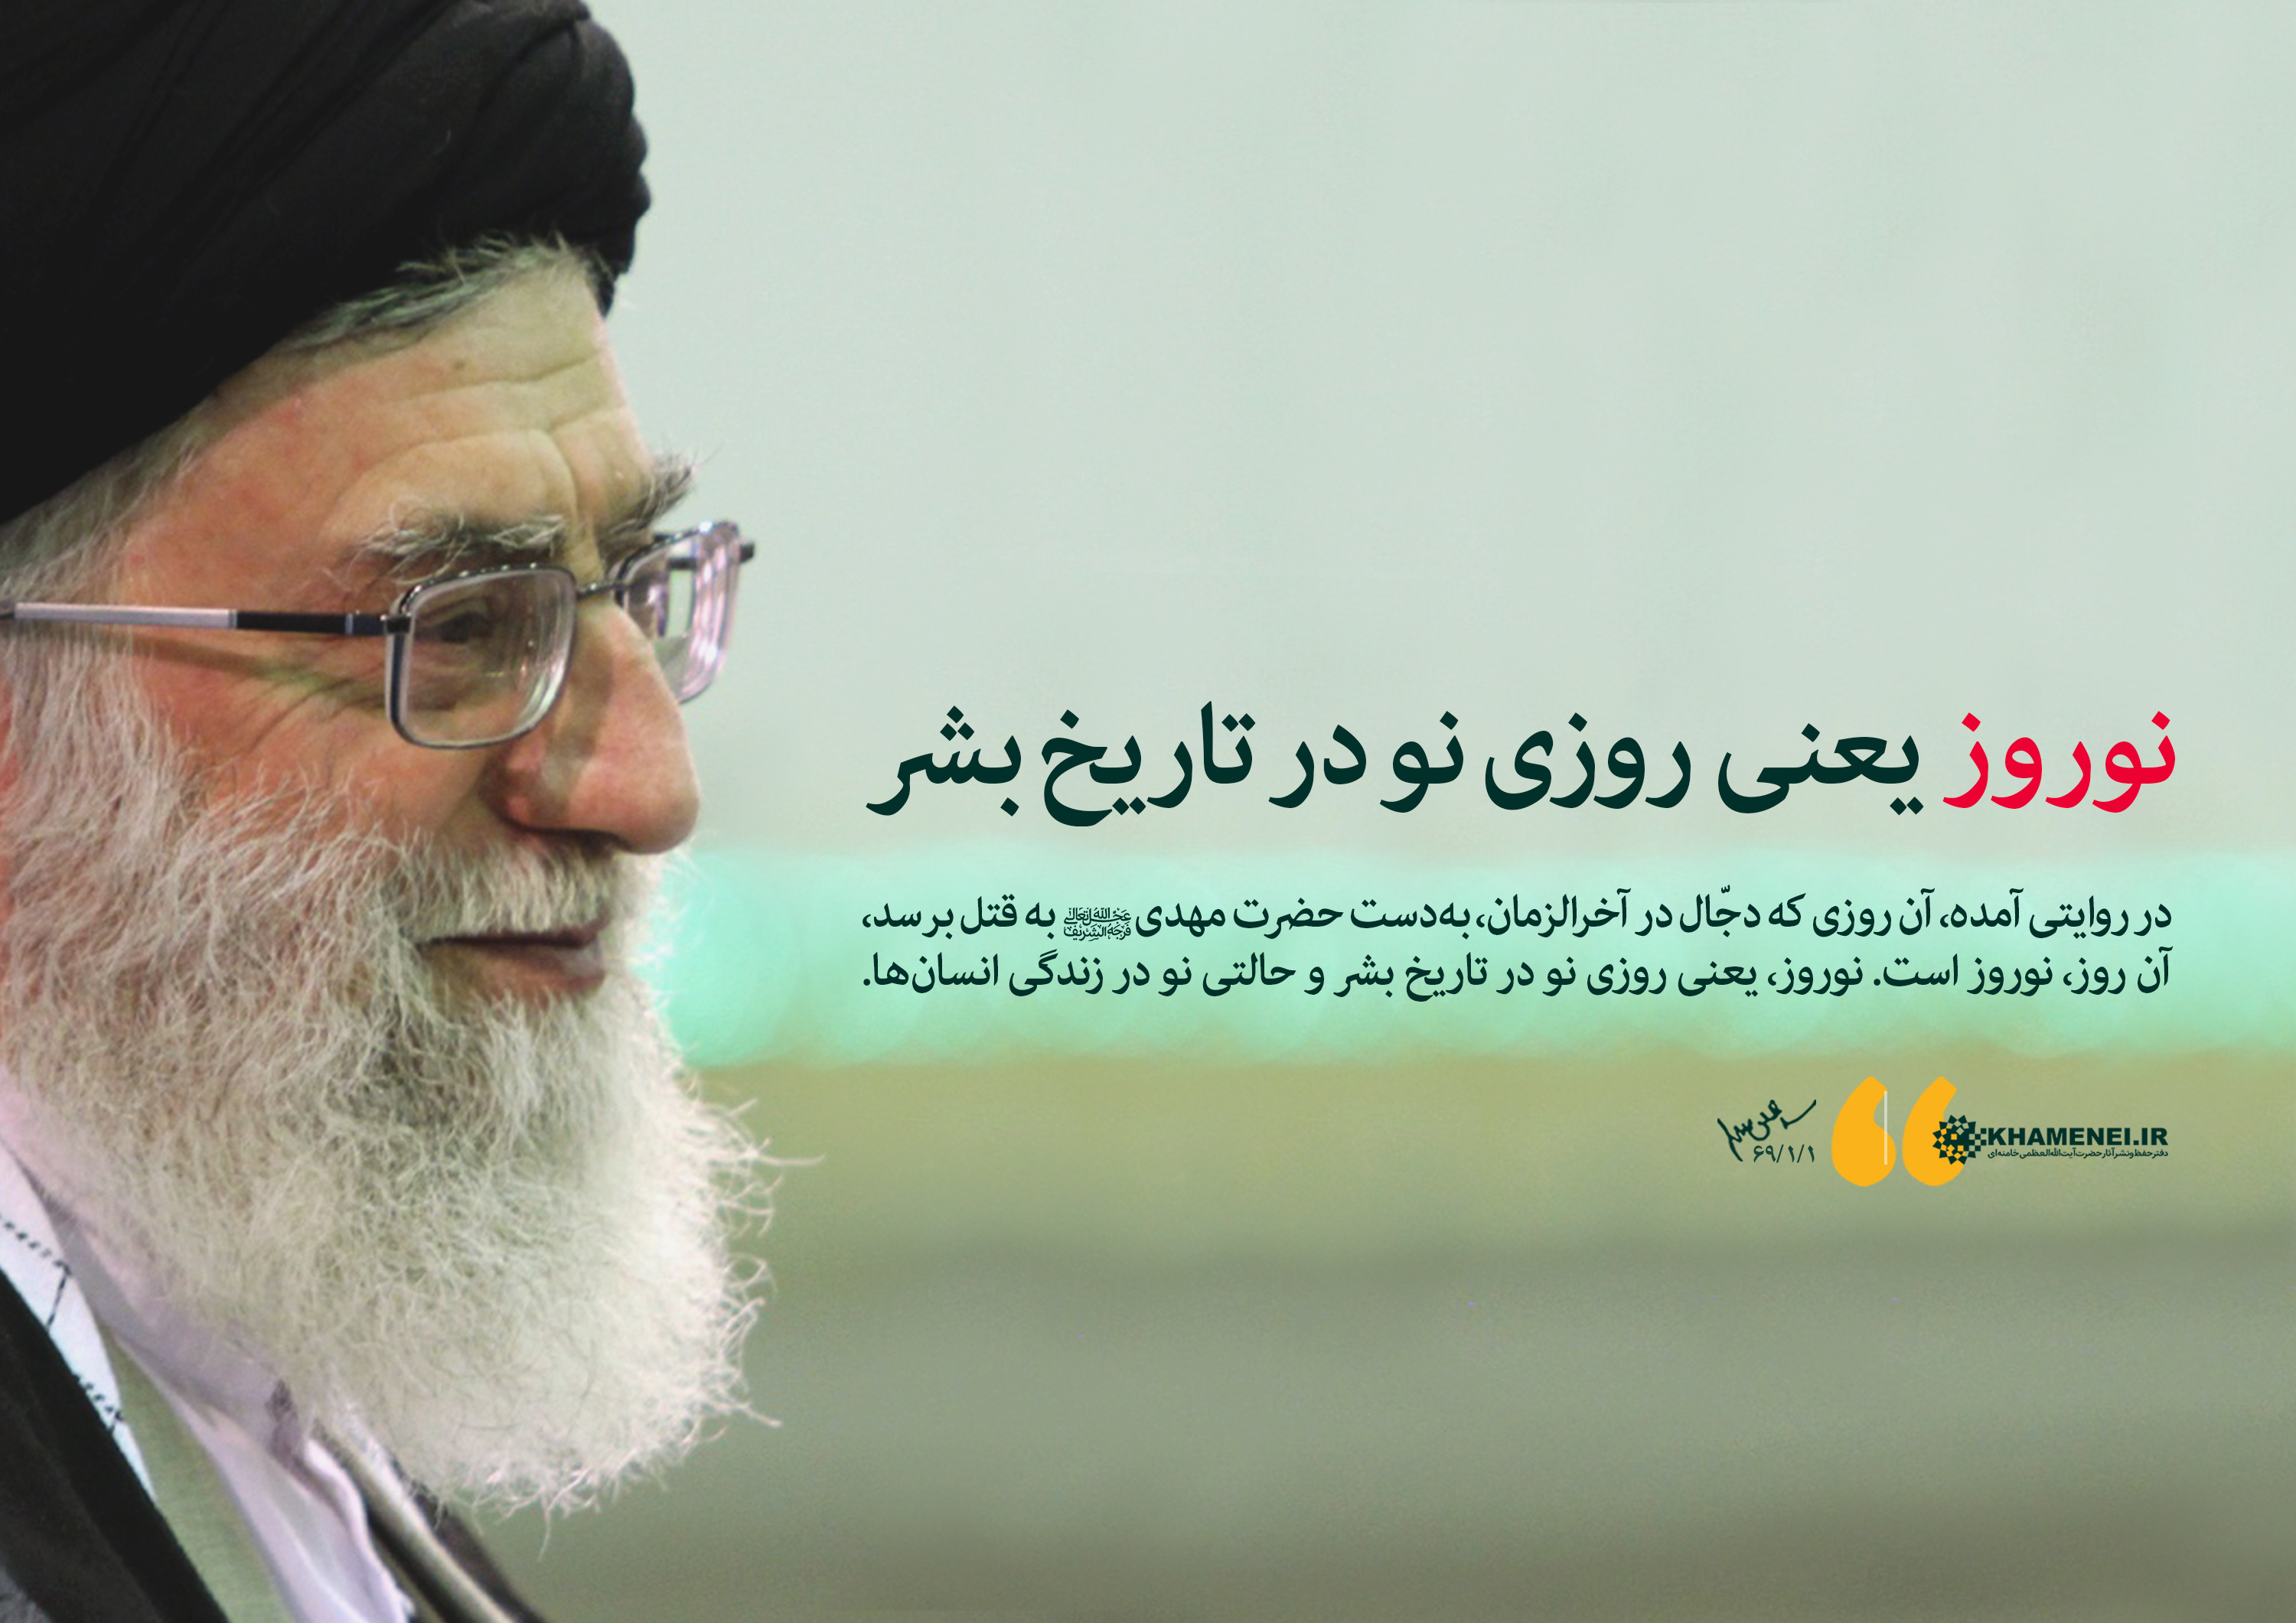 http://farsi.khamenei.ir/ndata/news/36122/B/13690101_0136122.jpg